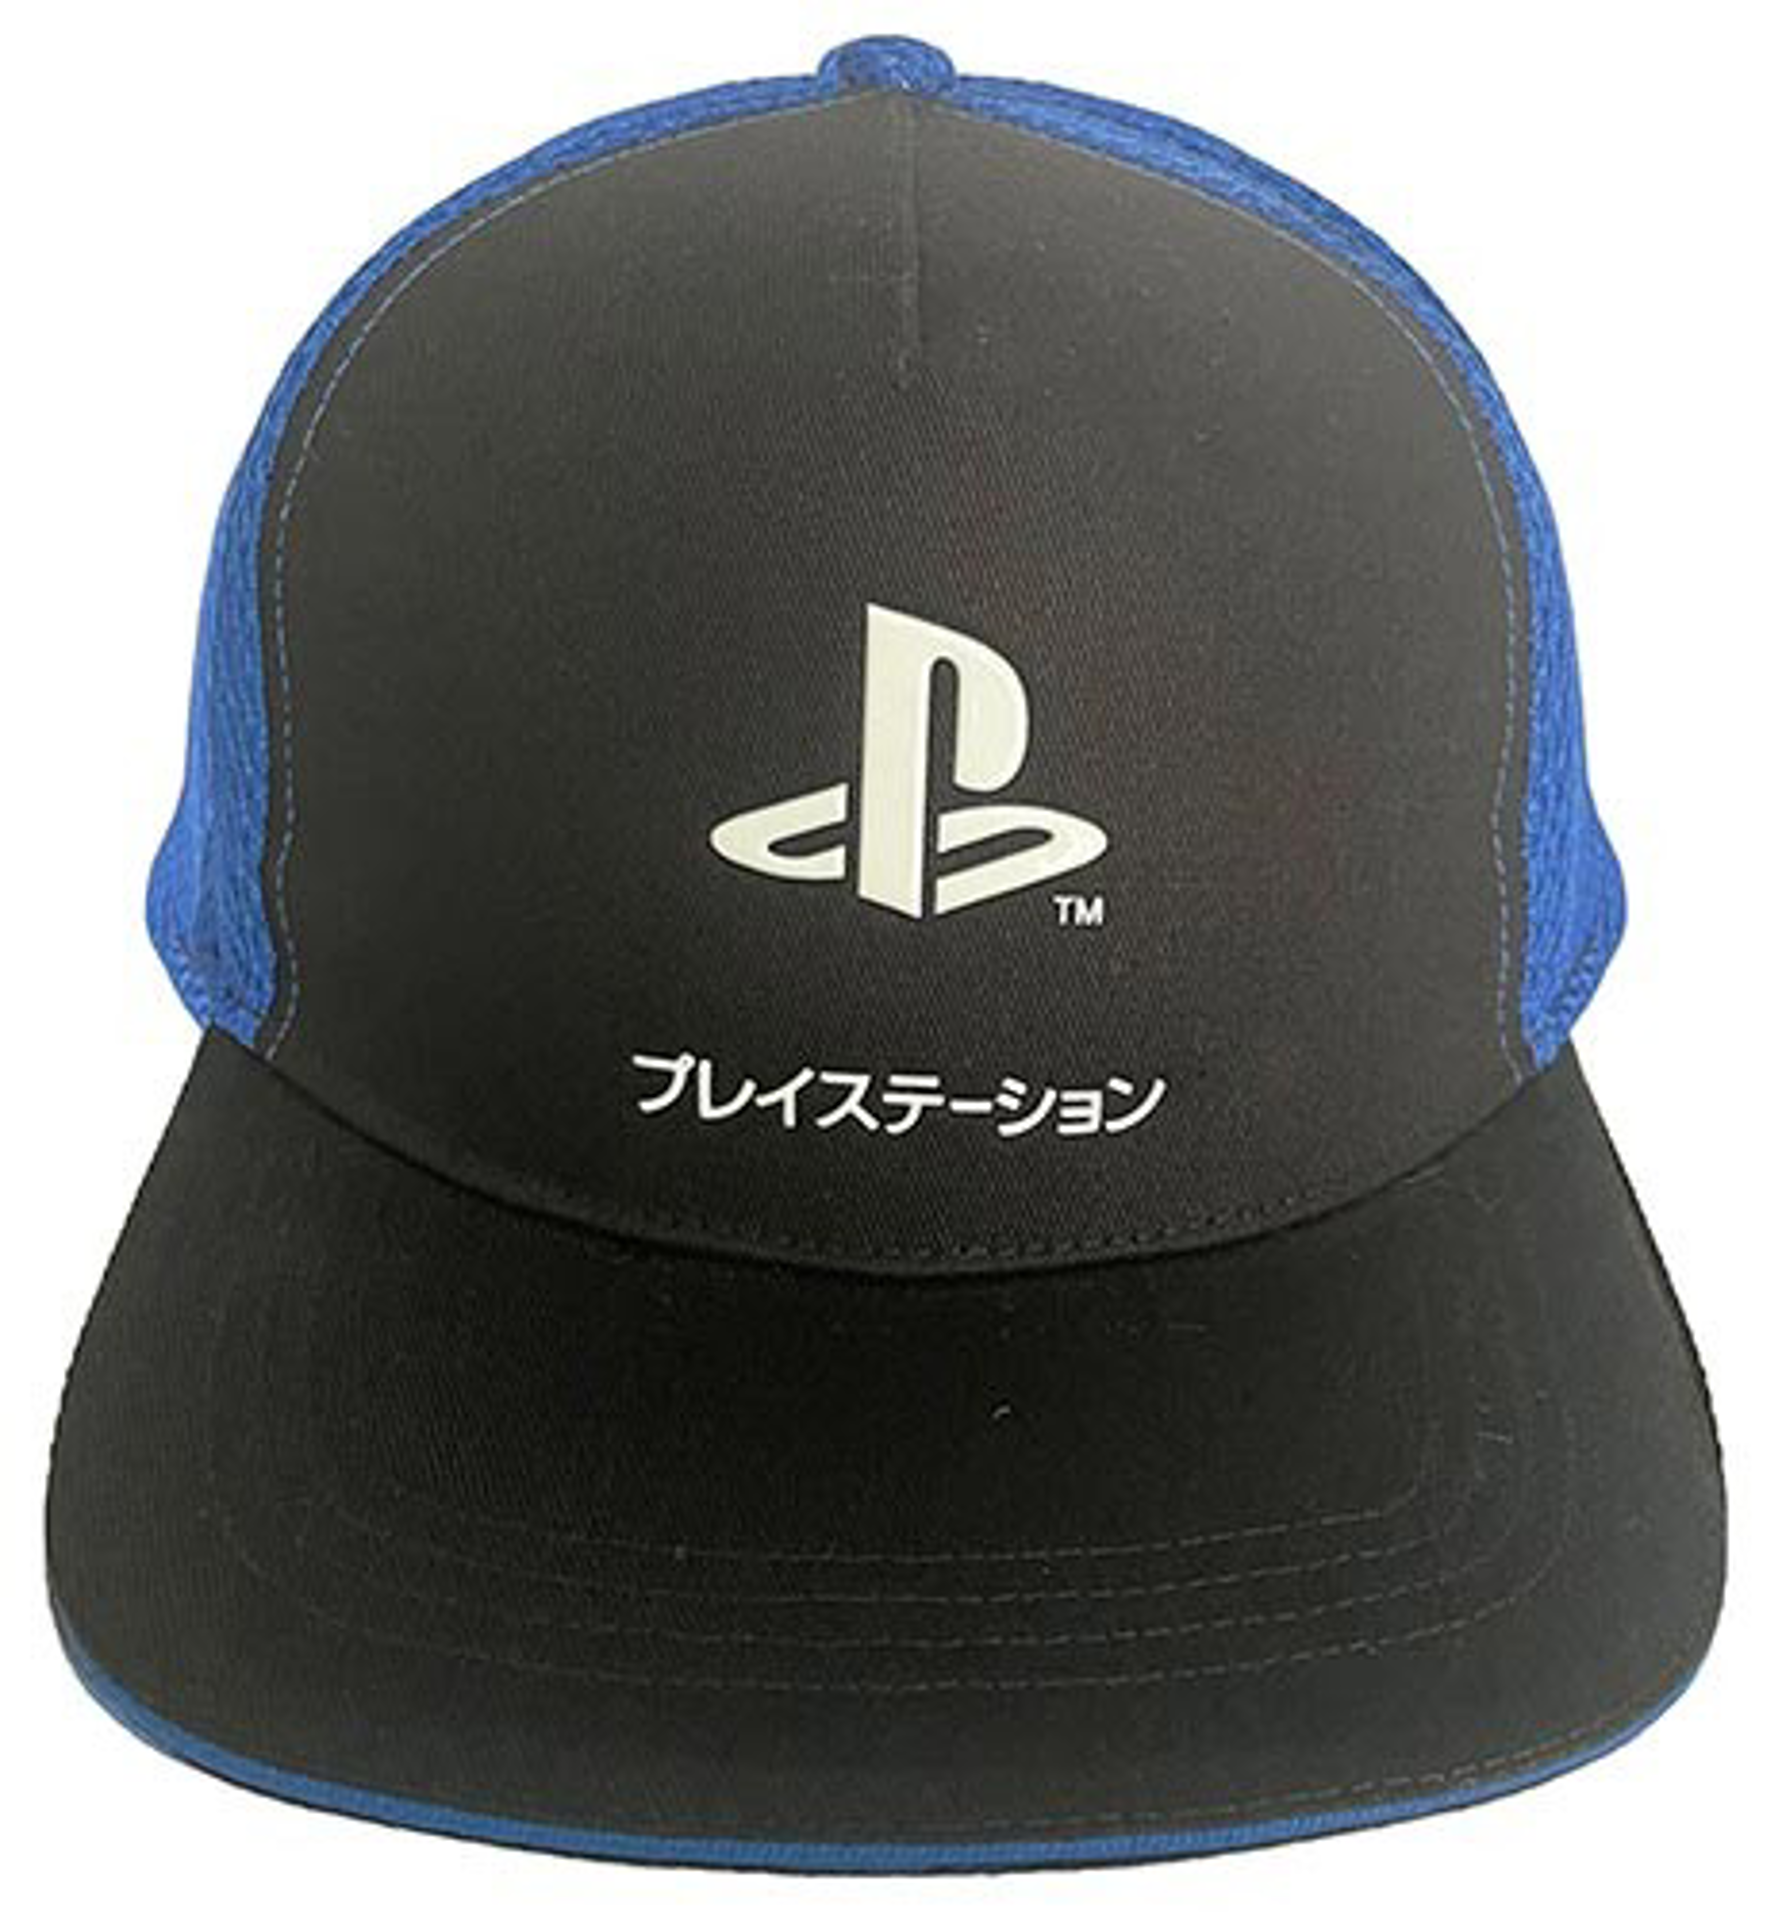 Playstation - Casquette Snapback Bleu et Noir Logo Katakana